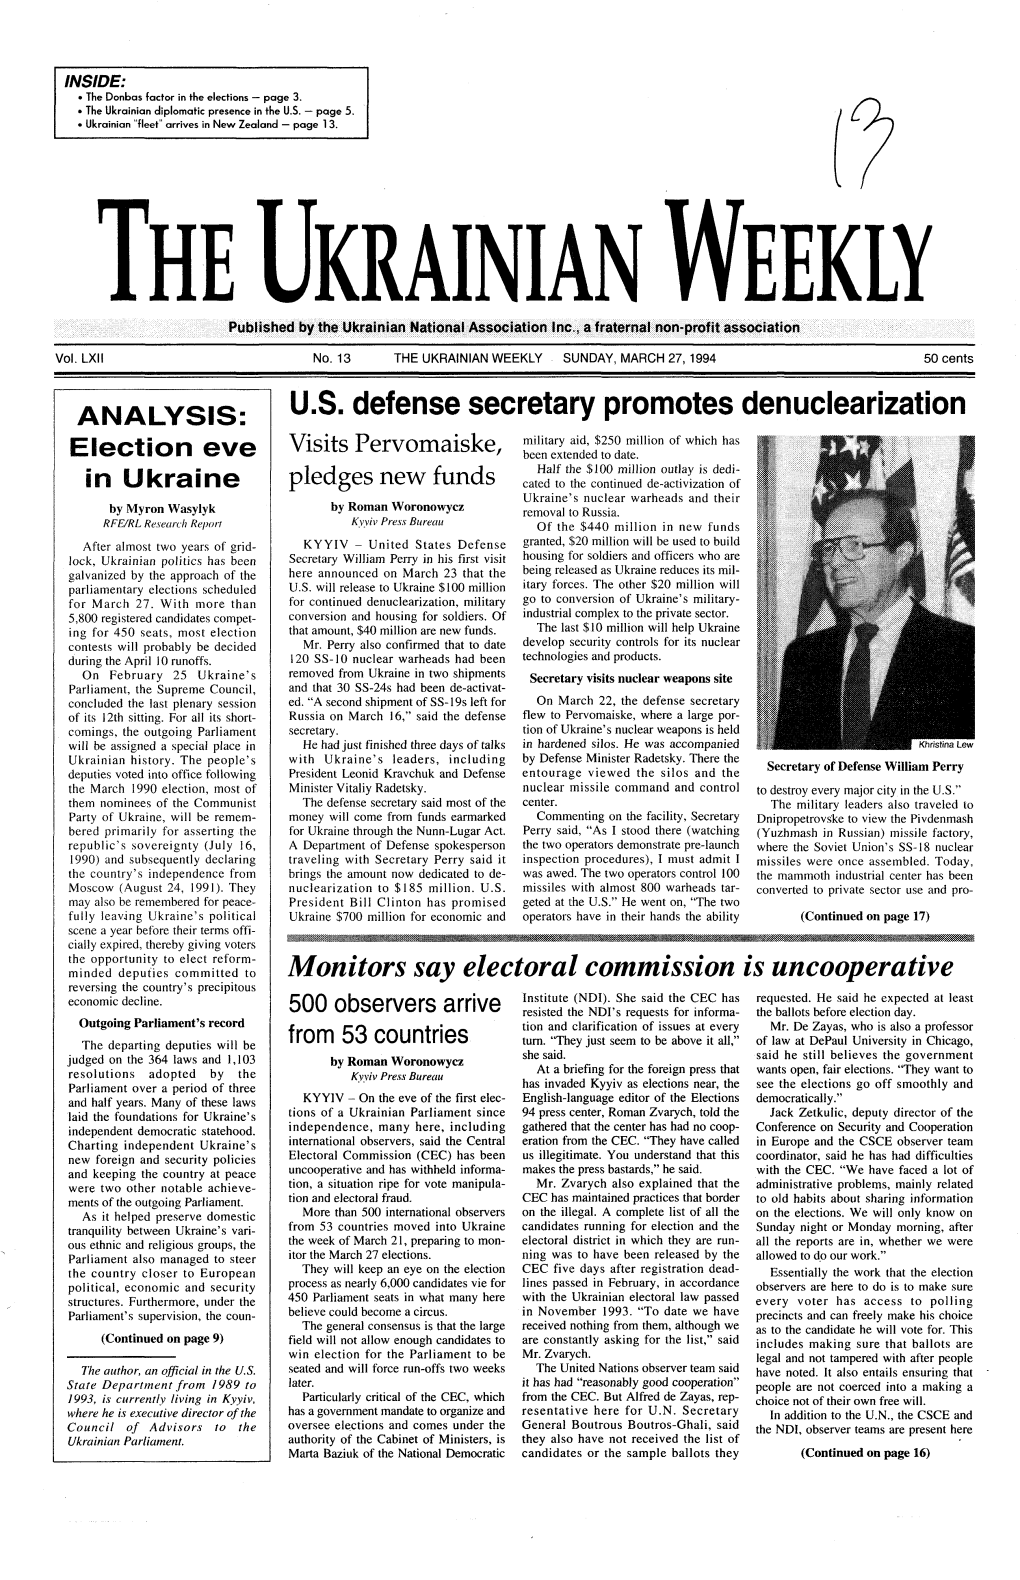 The Ukrainian Weekly 1994, No.13